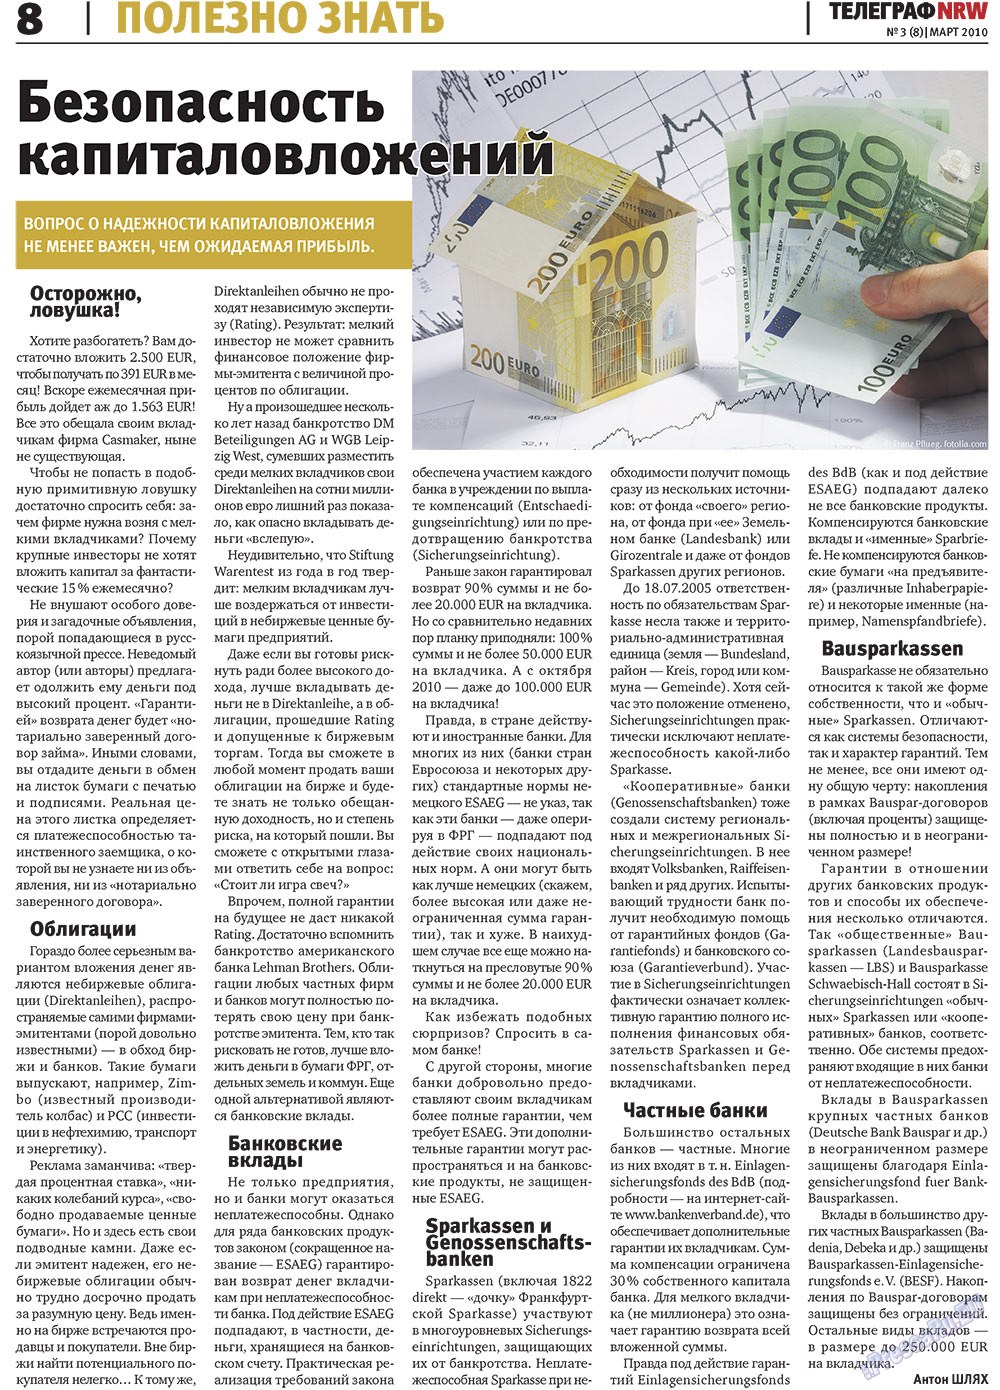 Телеграф NRW, газета. 2010 №3 стр.8